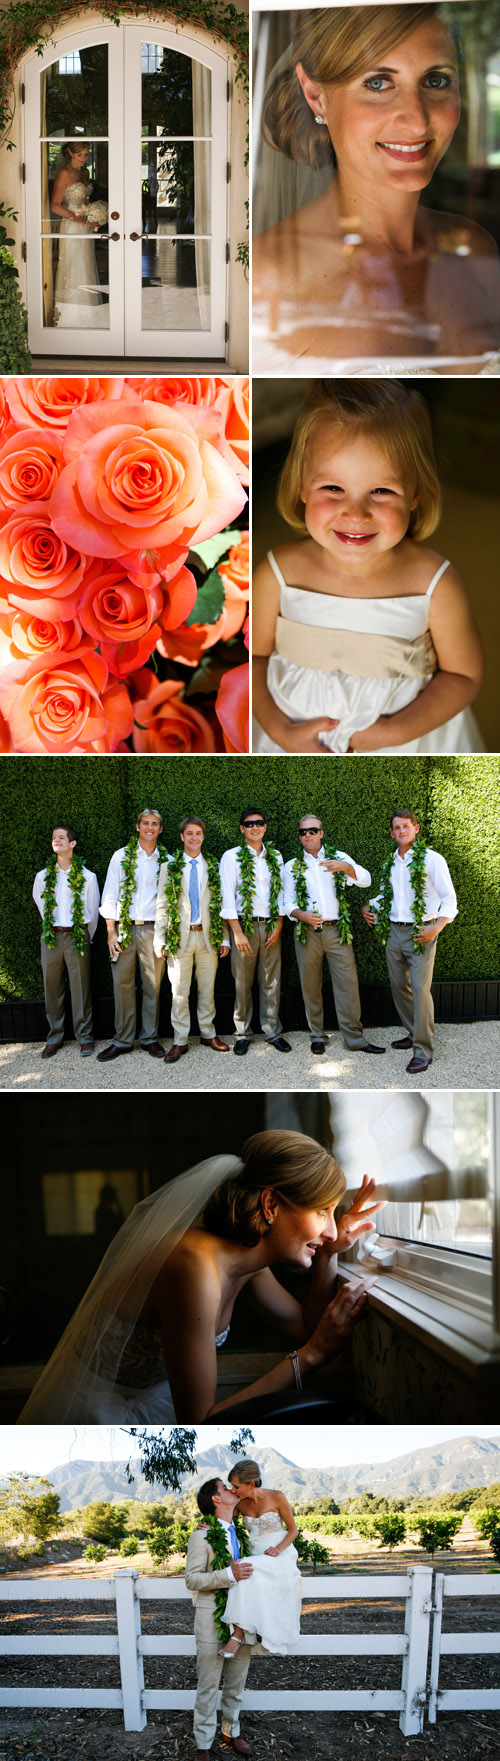 Santa Barbara, California real wedding coordinated by La Fete Weddings and photographed by Barnaby Draper Studios